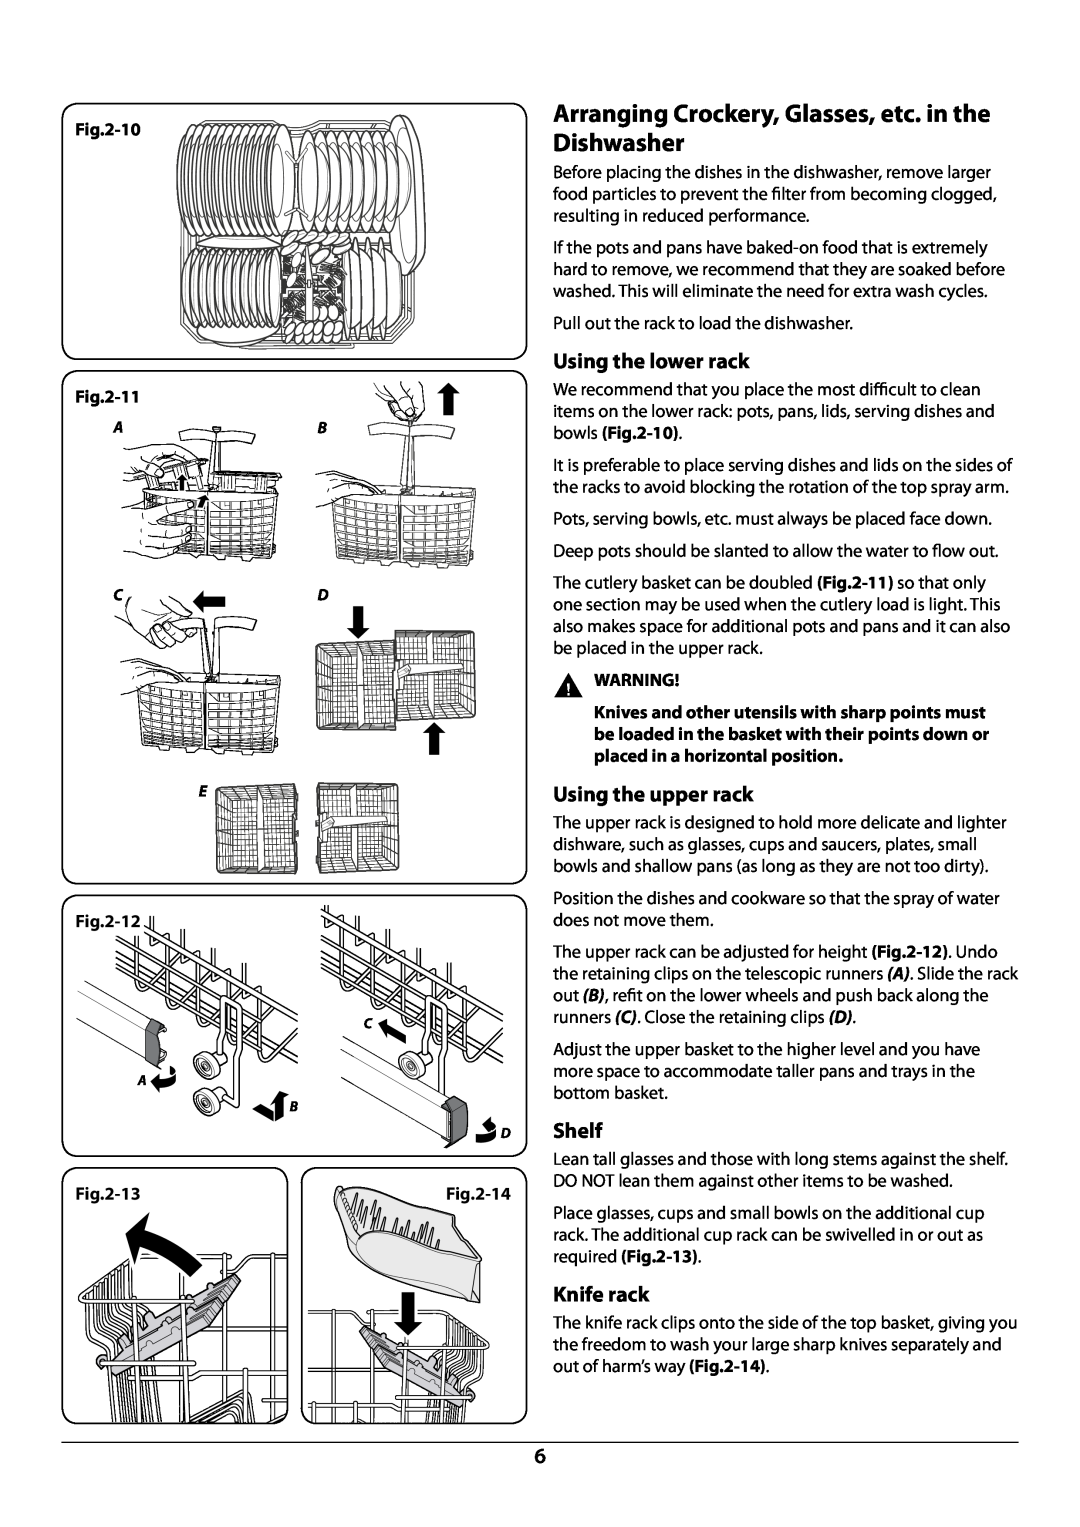 Rangemaster RDW6012FI Dishwasher, Using the lower rack, Using the upper rack, Shelf, Knife rack, 10, 11, 13,  Warning 